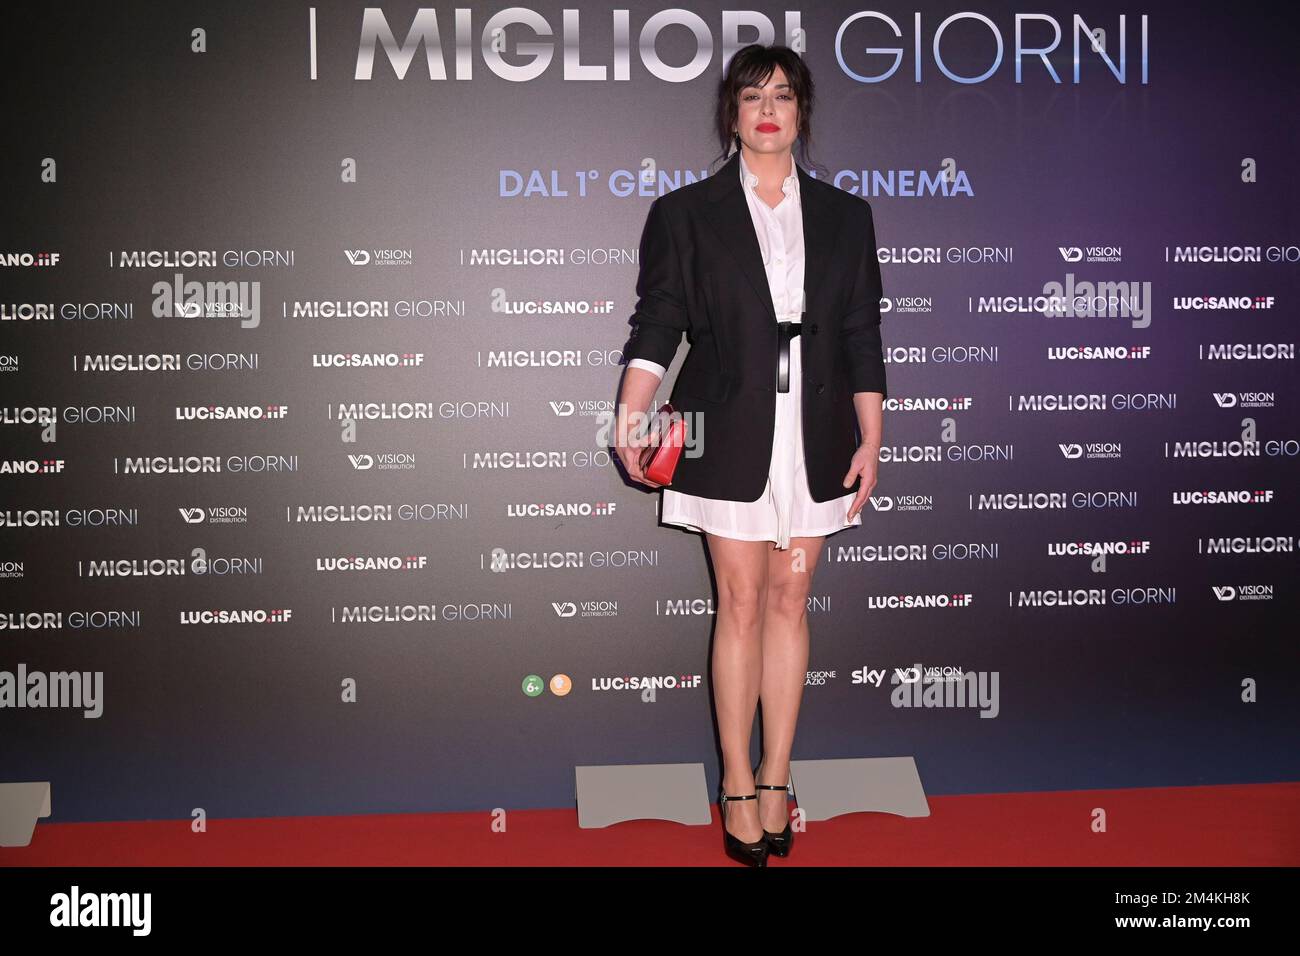 Rome, Italy. 21st Dec, 2022. Valentina Lodovini attends the red carpet of the movie 'I migliori giorni' at Cinema Adriano. Credit: SOPA Images Limited/Alamy Live News Stock Photo